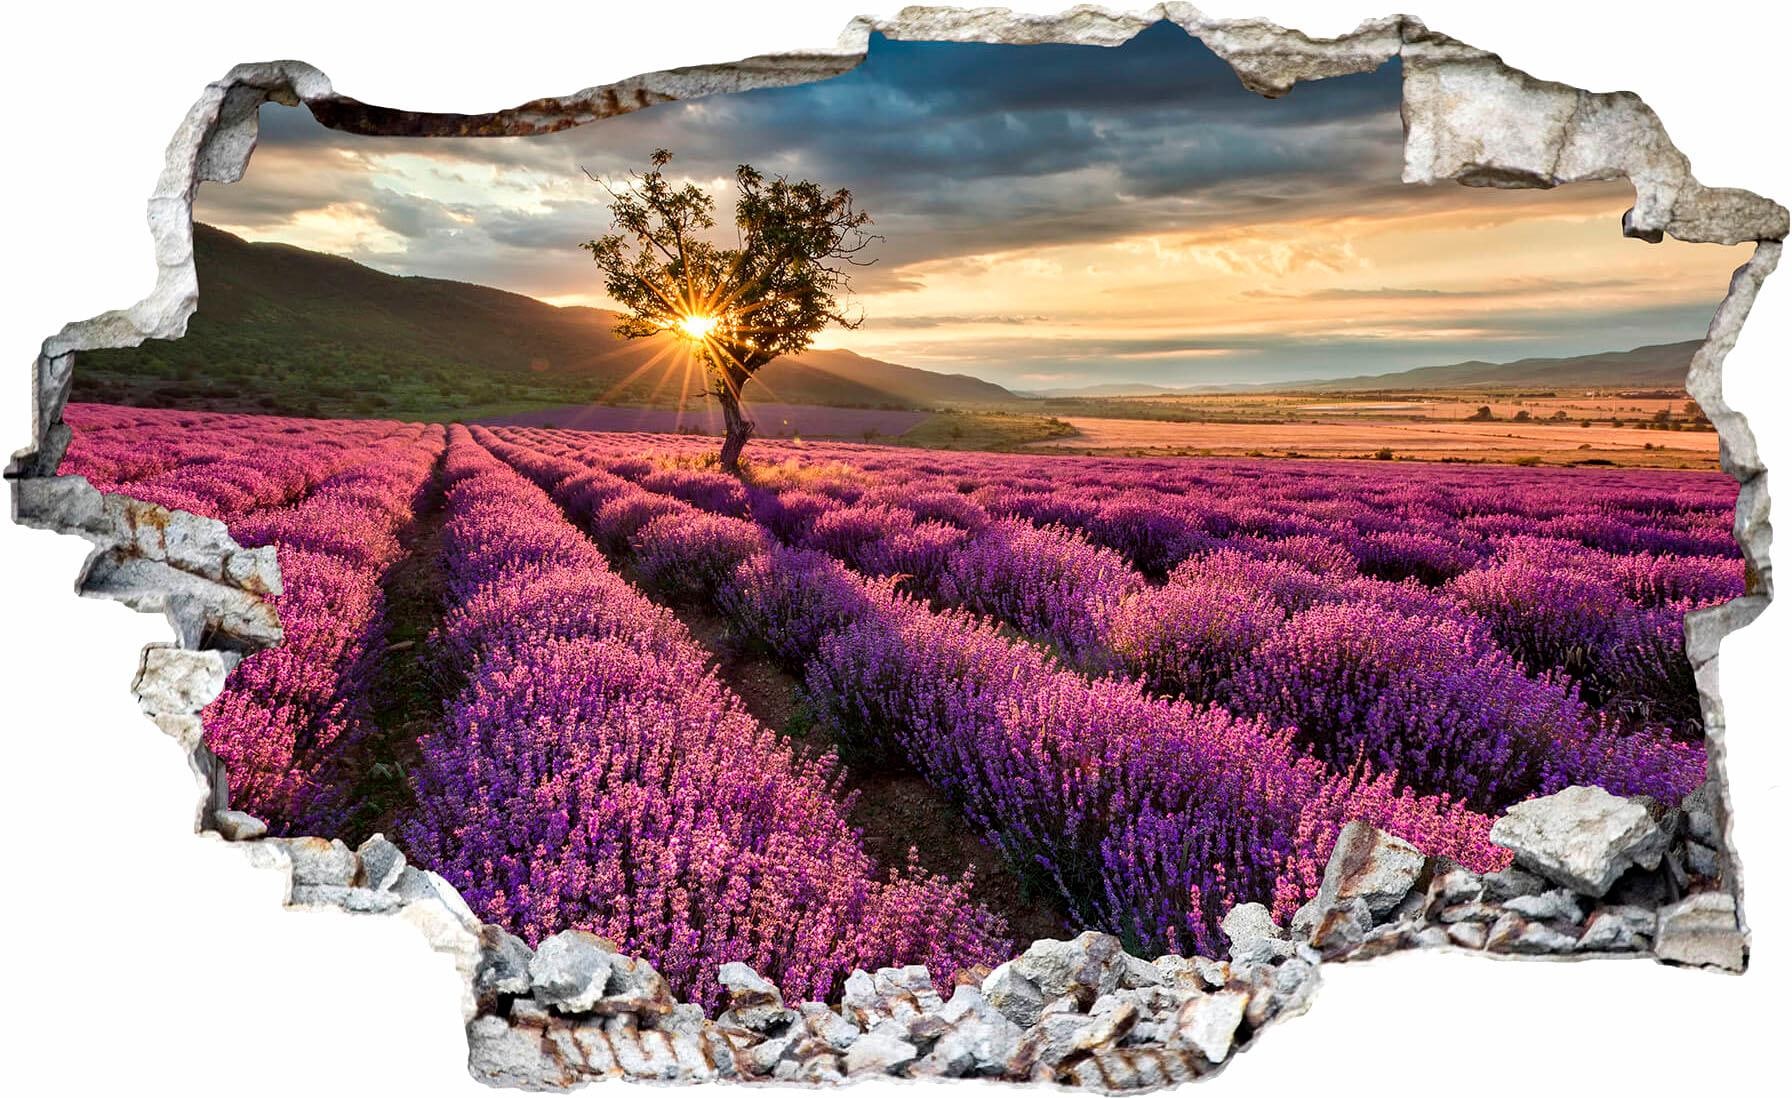 Wall-Art Wandtattoo »Lavendel in der Provence«, selbstklebend, entfernbar